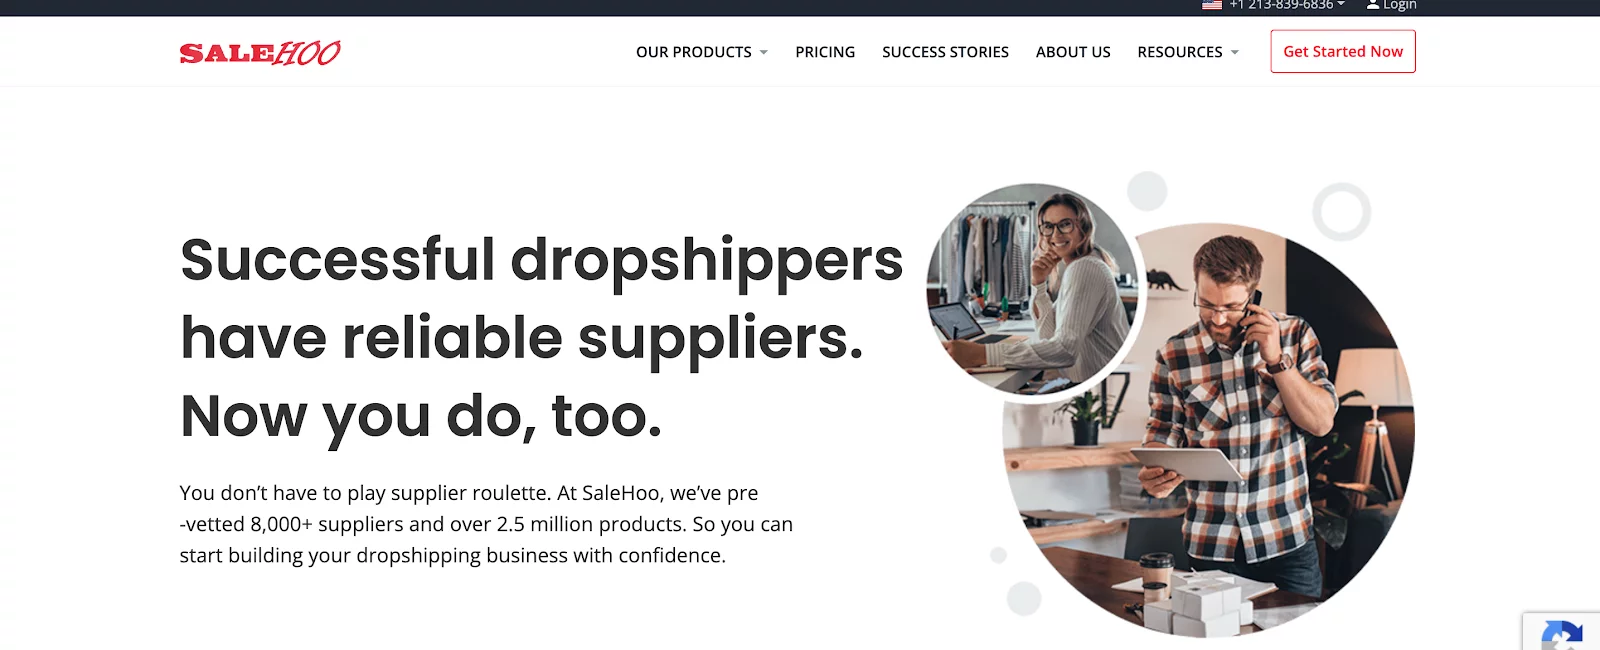 Dropshipping Shoe Suppliers - Salehoo